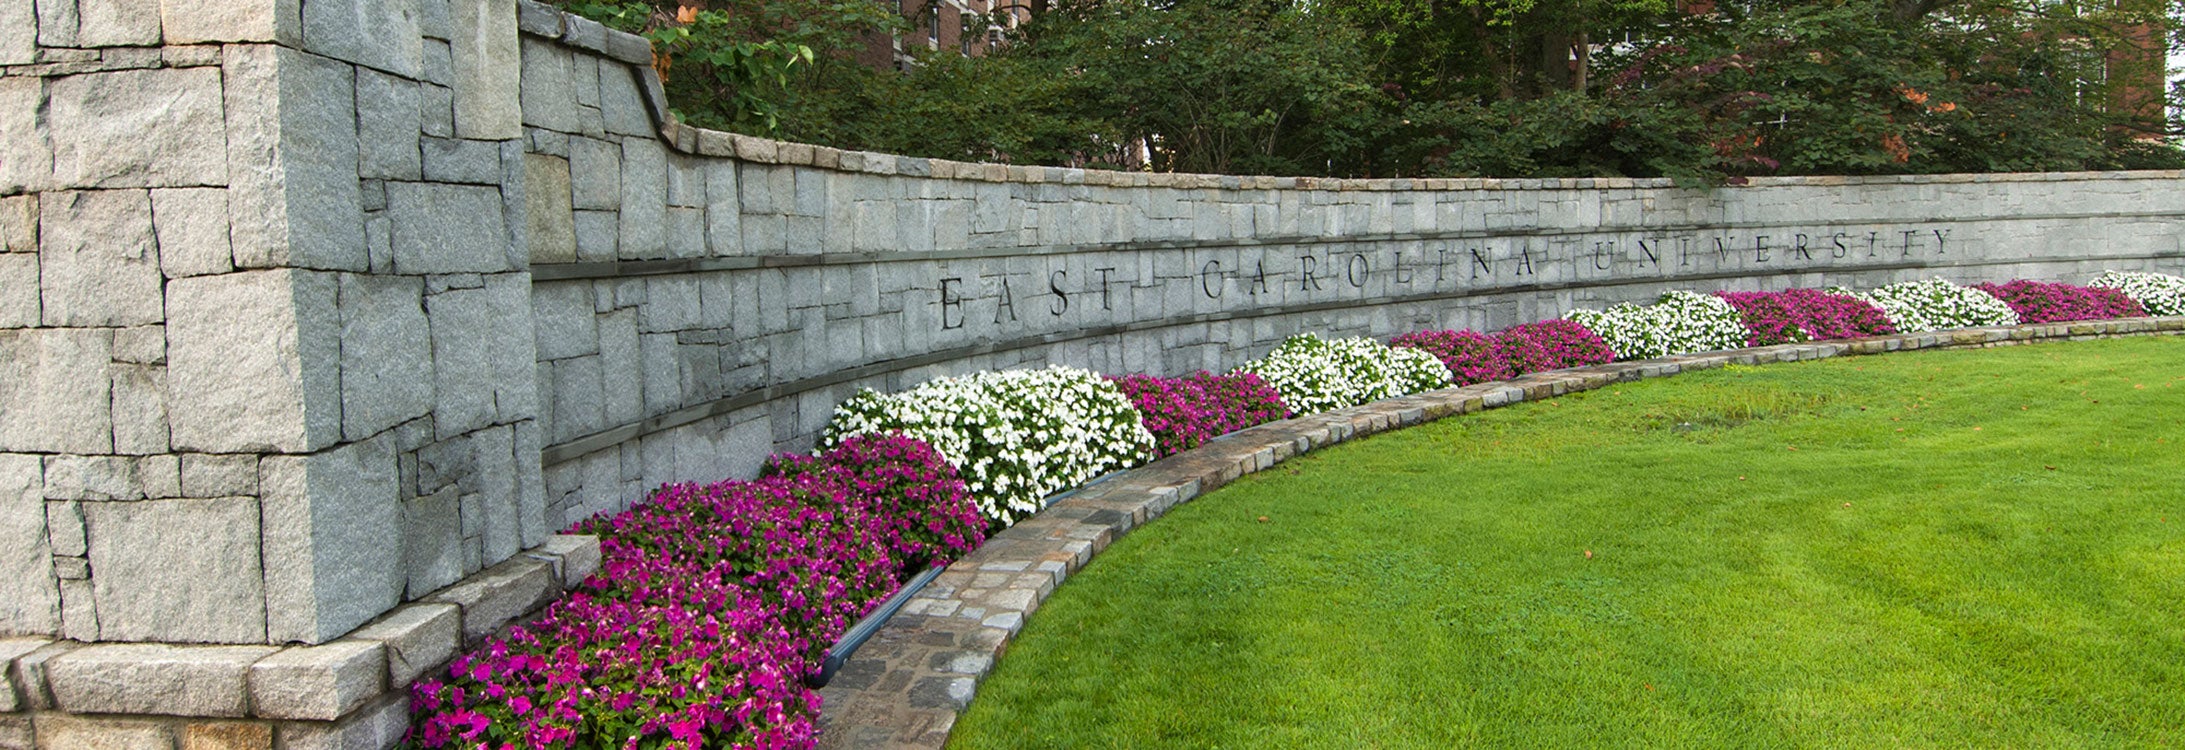 ECU signage with flowers